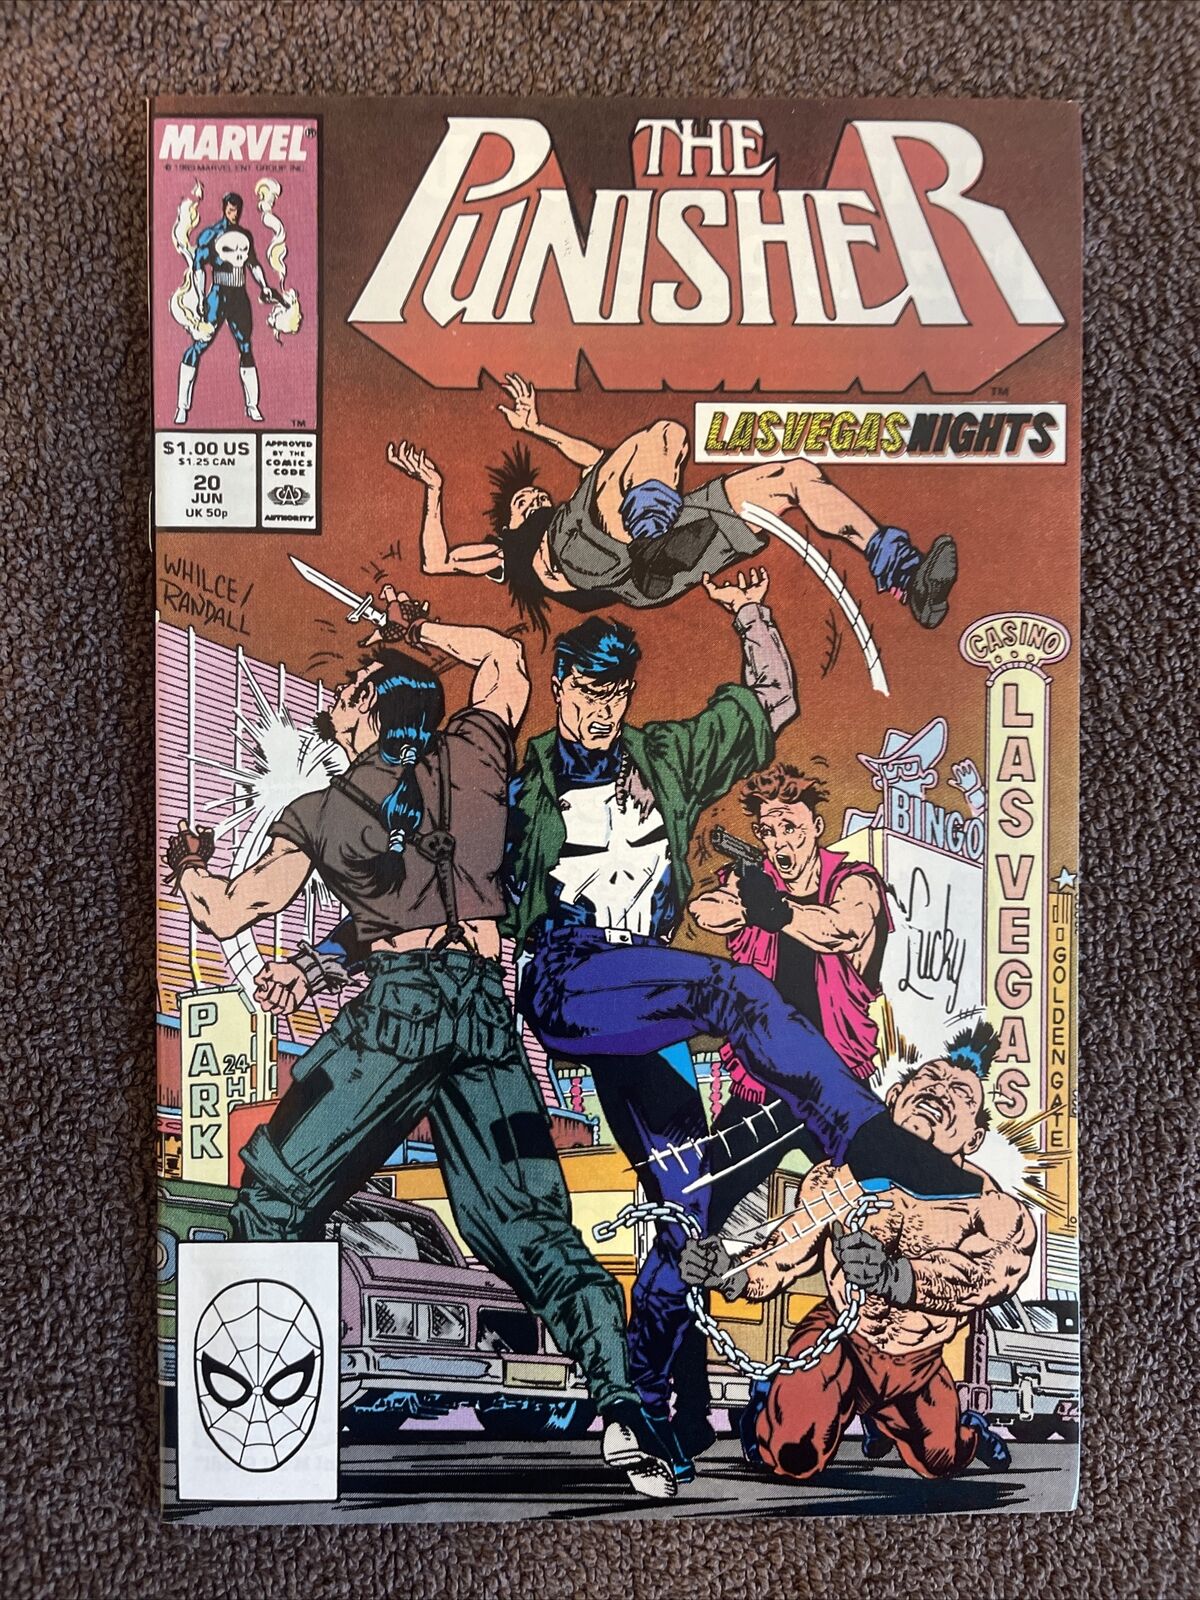 THE PUNISHER #20 (Marvel, 1989) Baron & Pensa